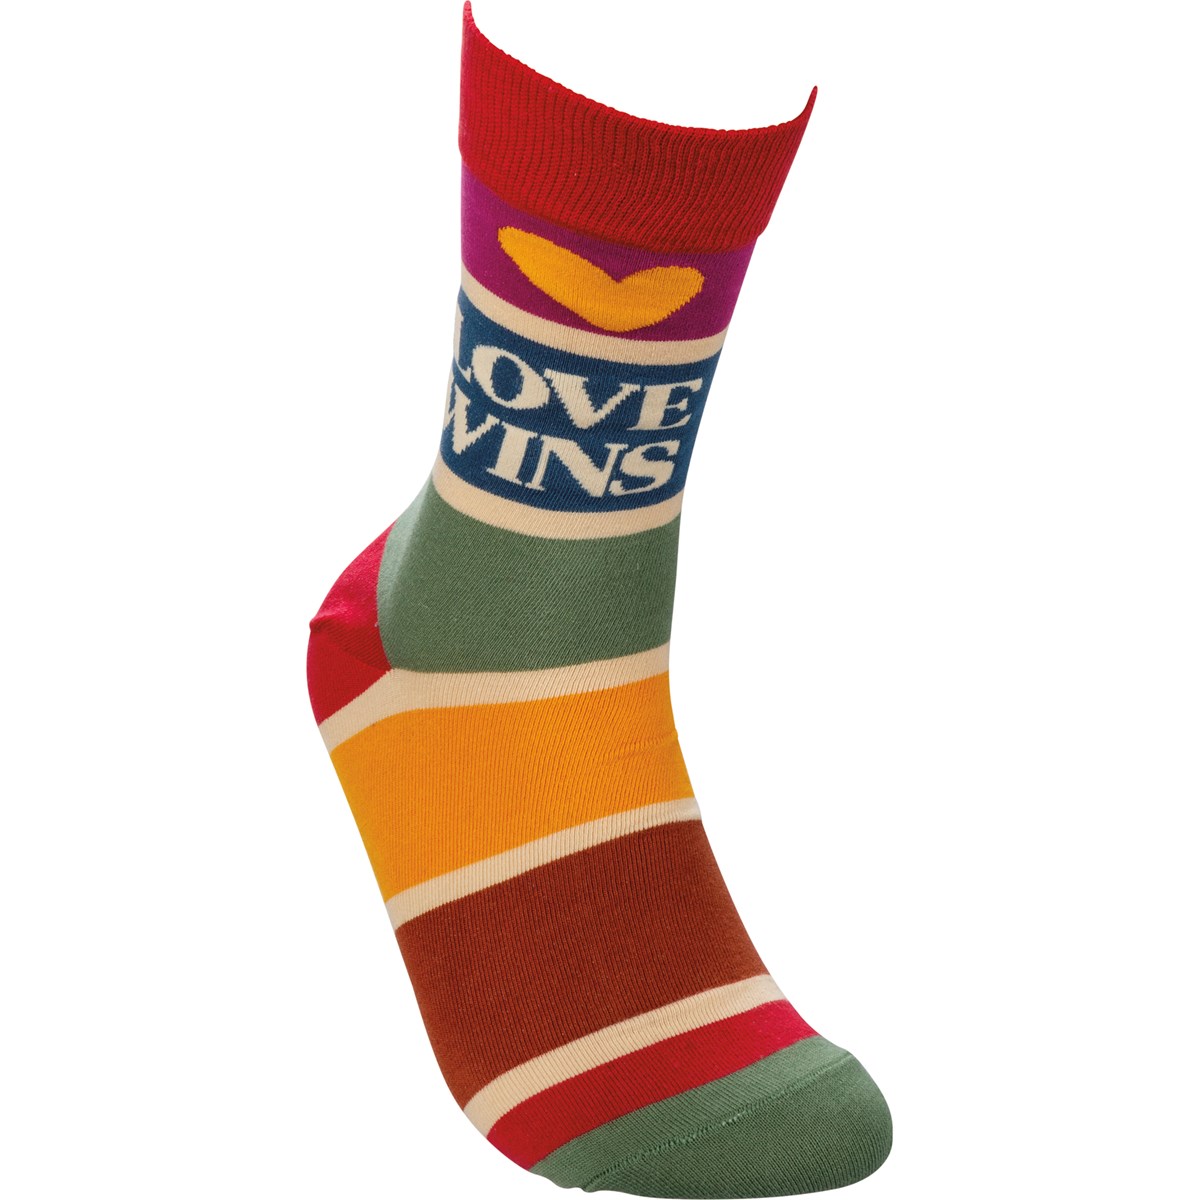 Socks - Love Wins - One Size Fits Most - Cotton, Nylon, Spandex